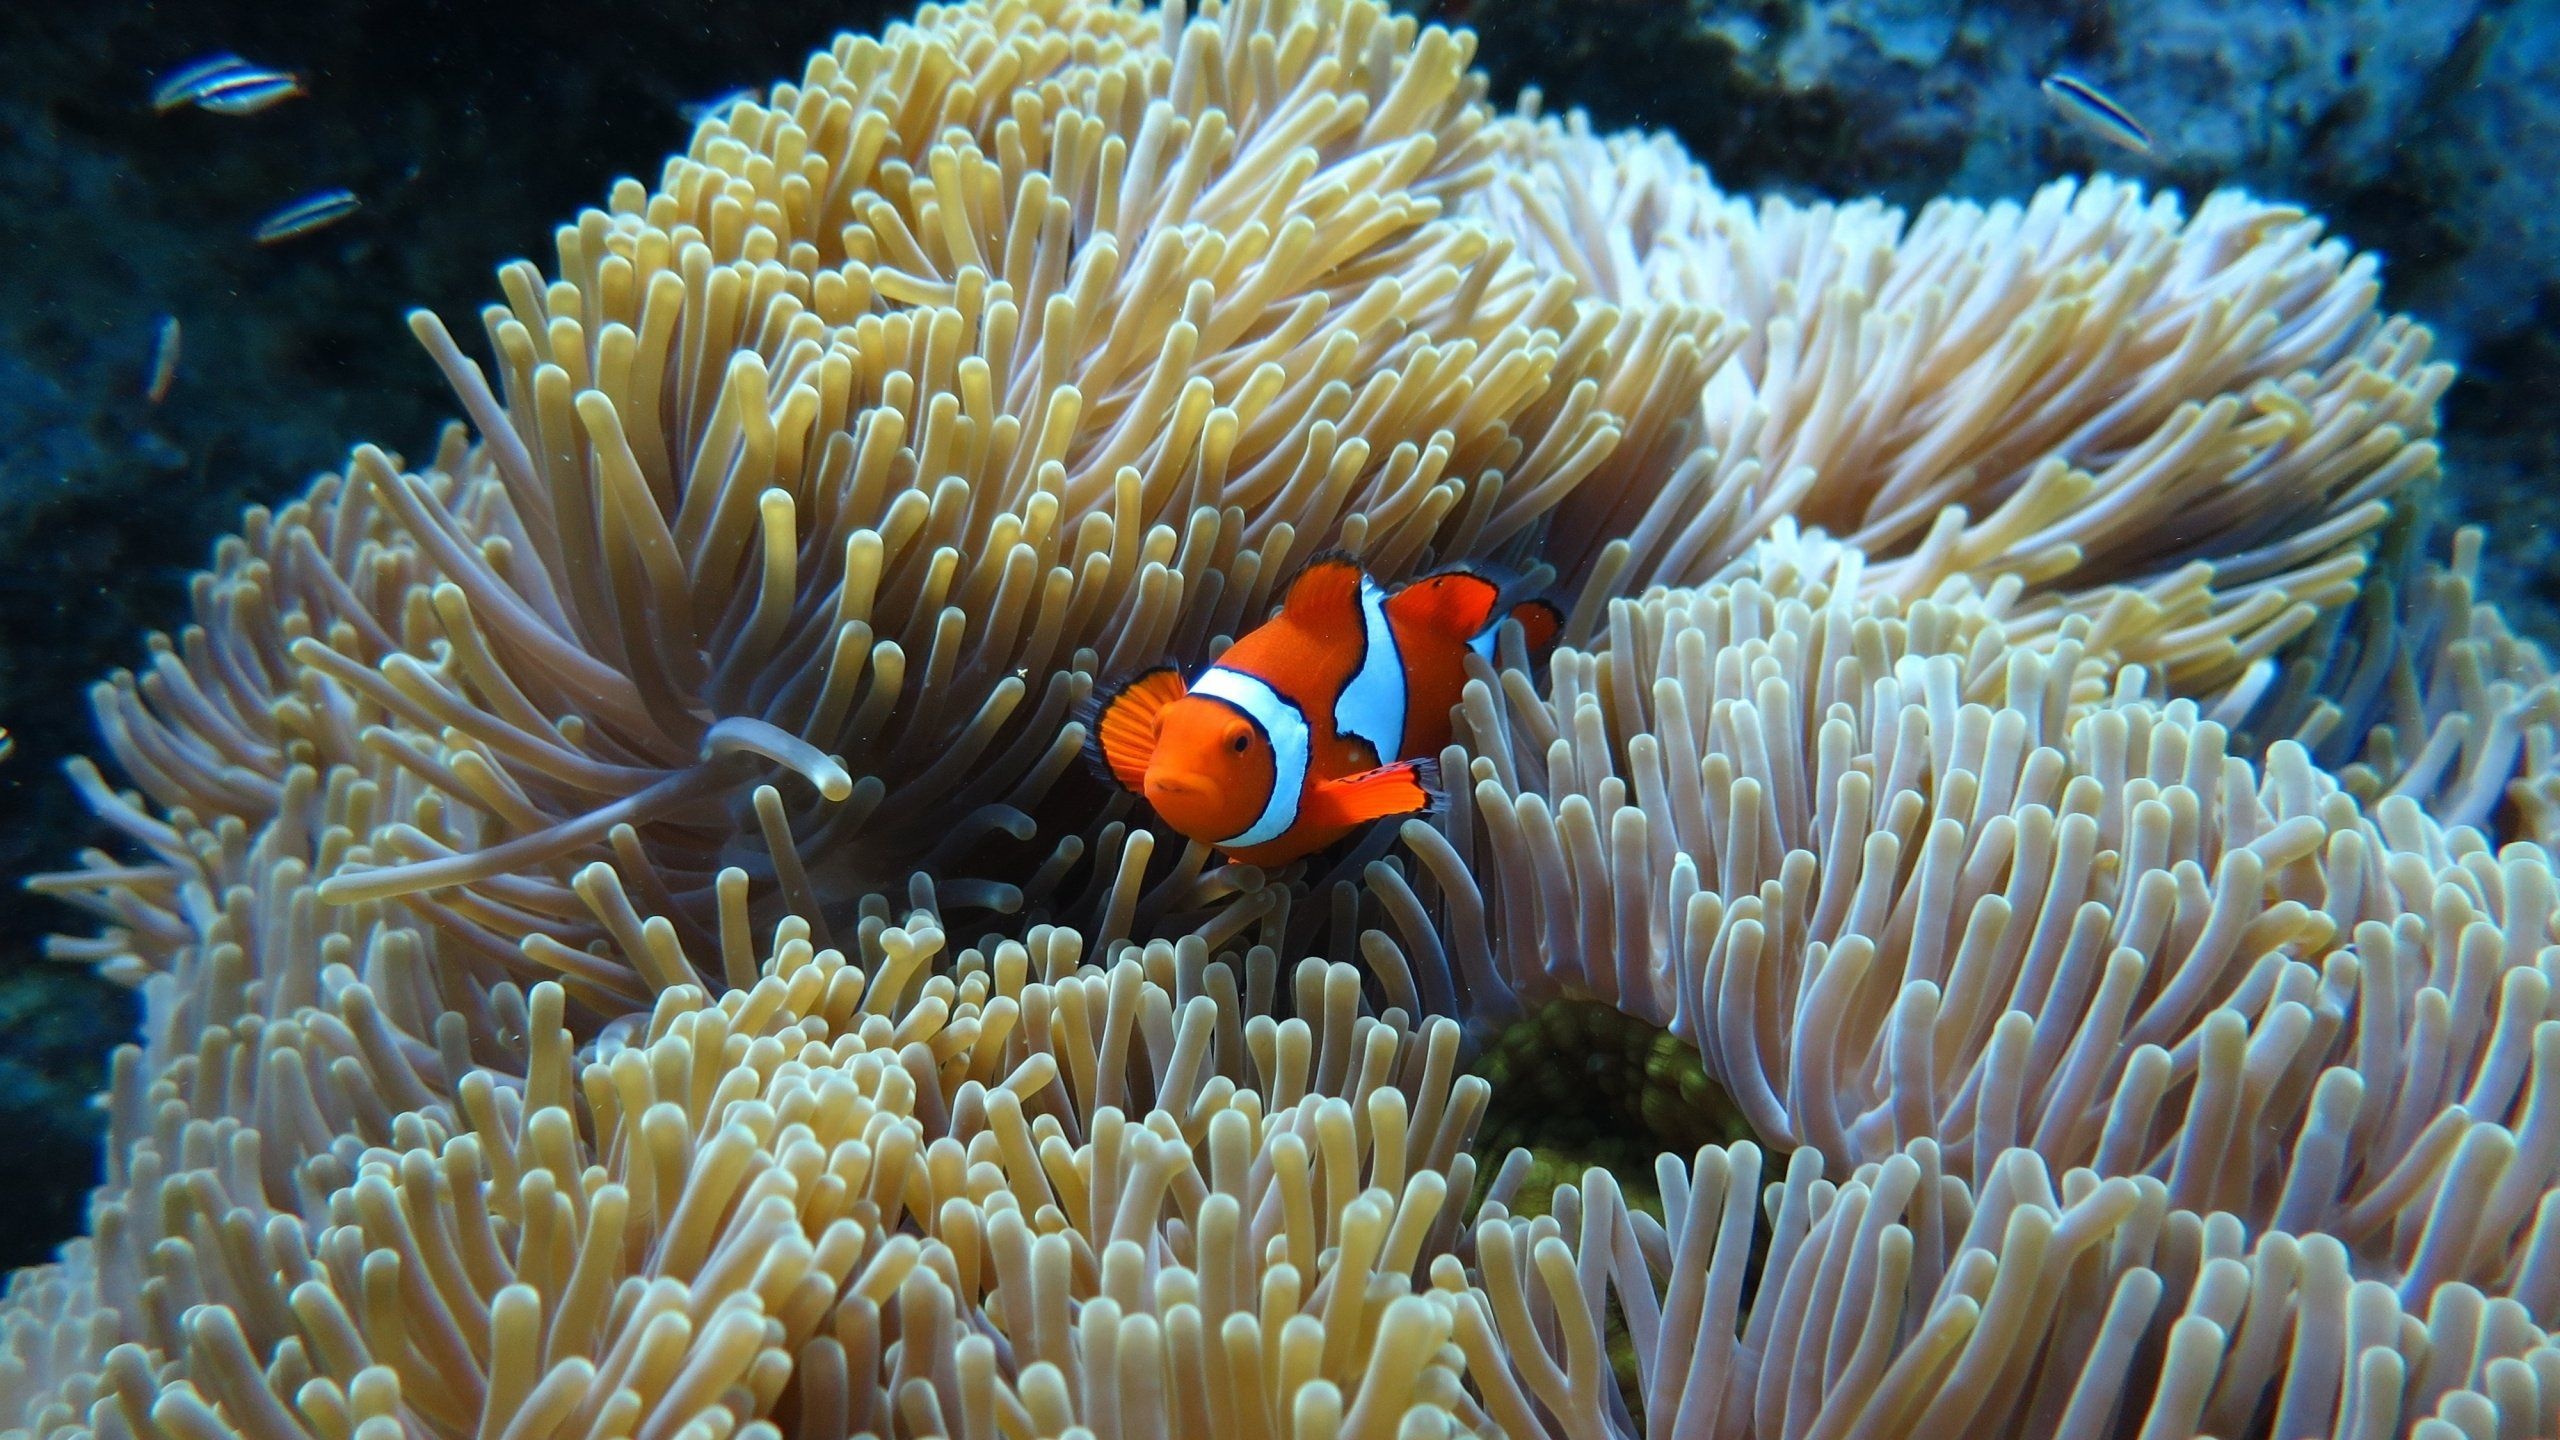 Captivating clown fish, Free HD wallpaper, Marine-themed background, Underwater beauty, 2560x1440 HD Desktop